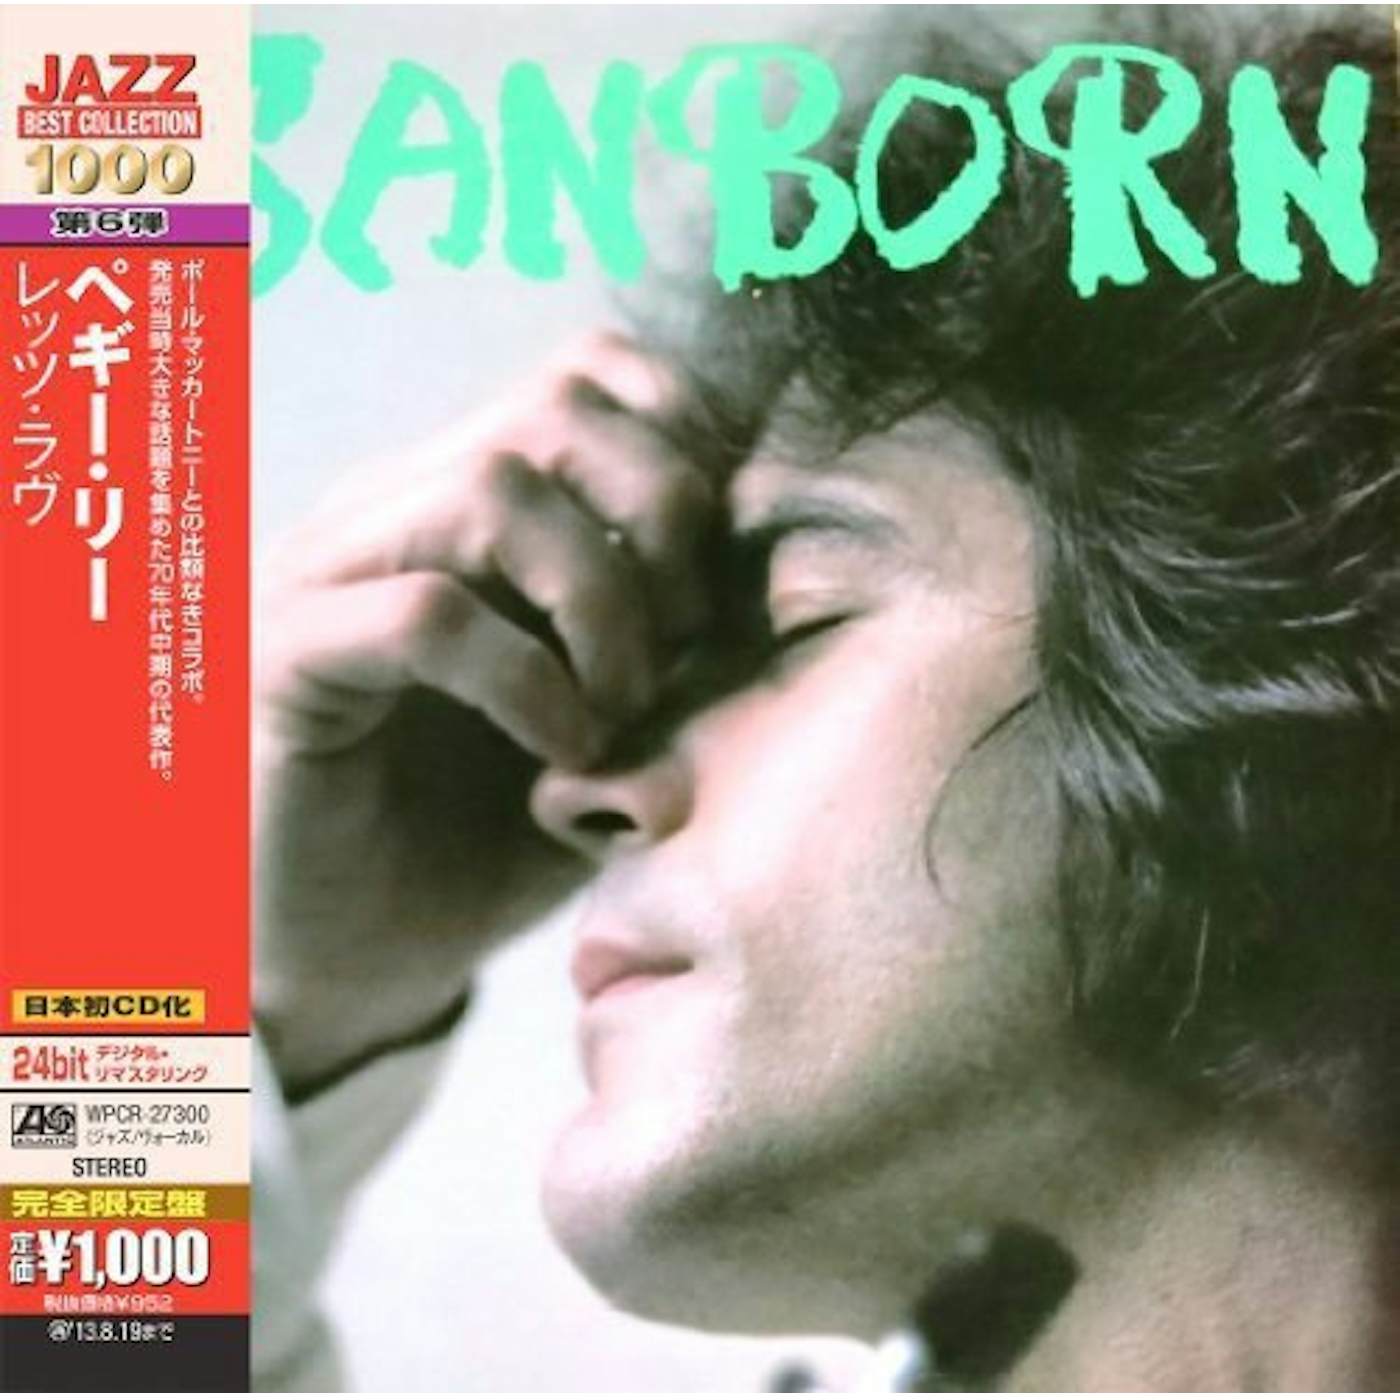 David Sanborn SANBORN CD